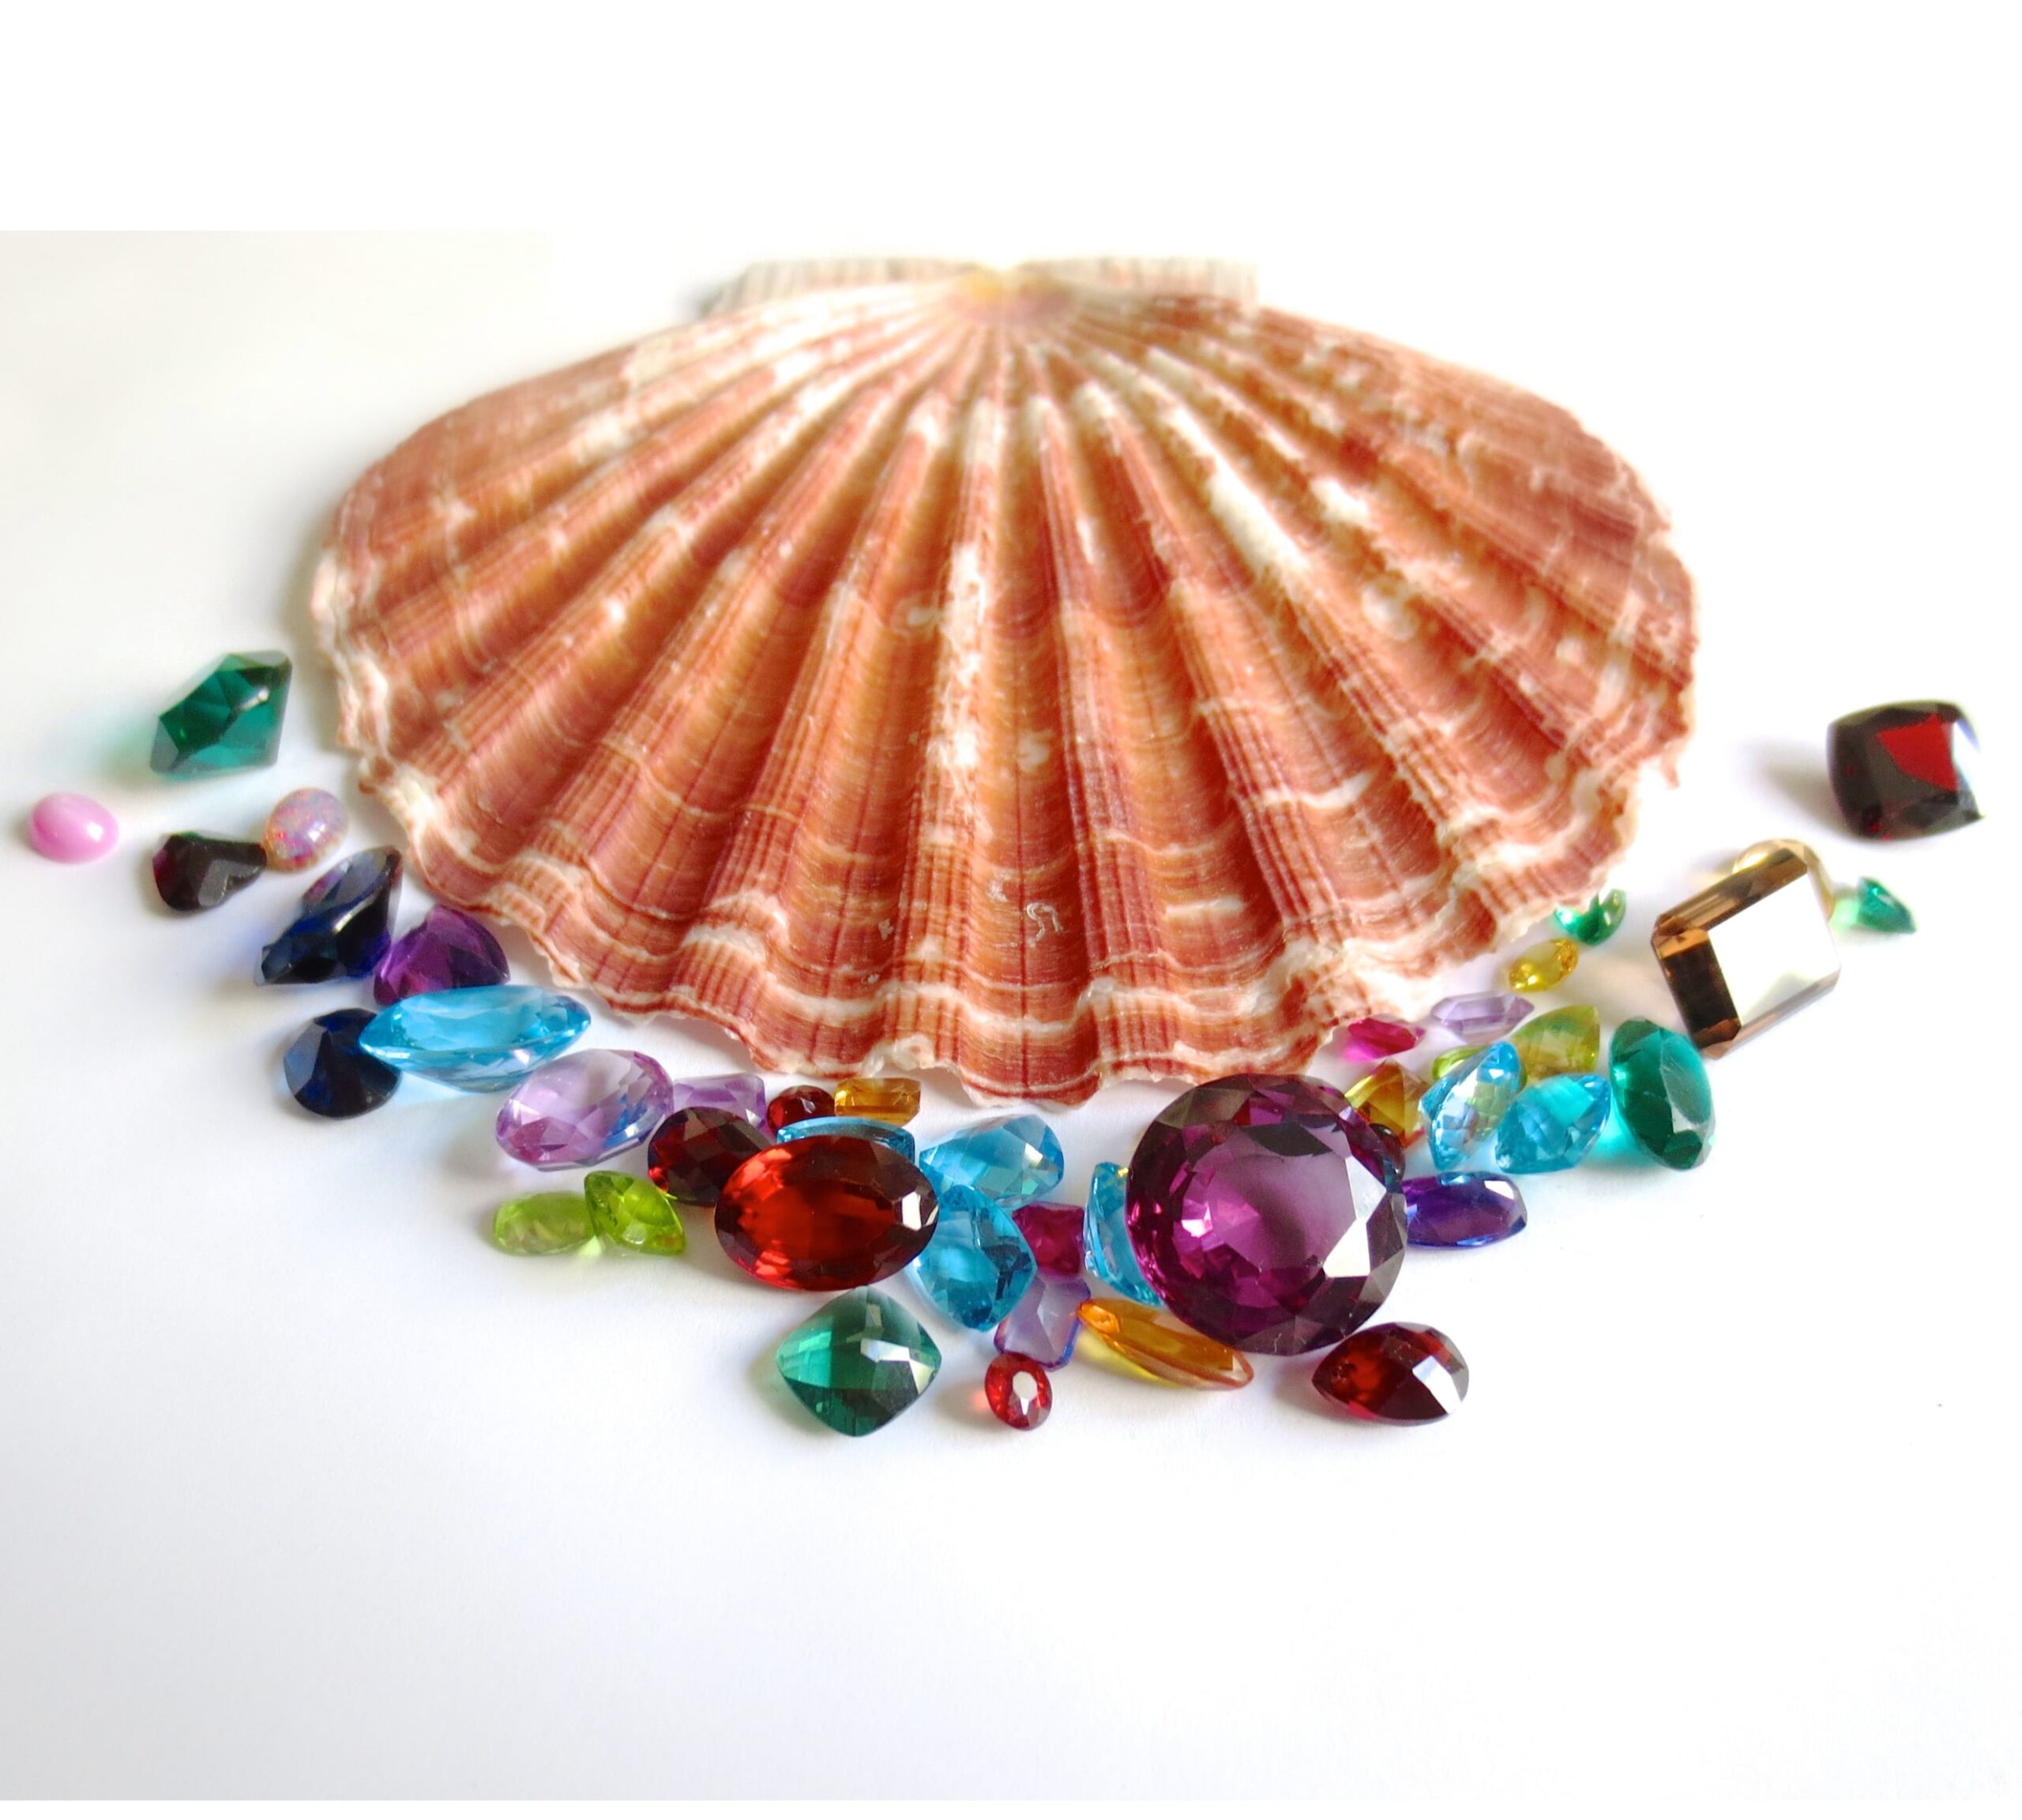 Mixed Gems, 50 Carat Lot Loose Gemstones, 100% Natural Wholesale Gems, Some  Inclusions, 20-30 Pieces, GemMartUSA (MX-60001)